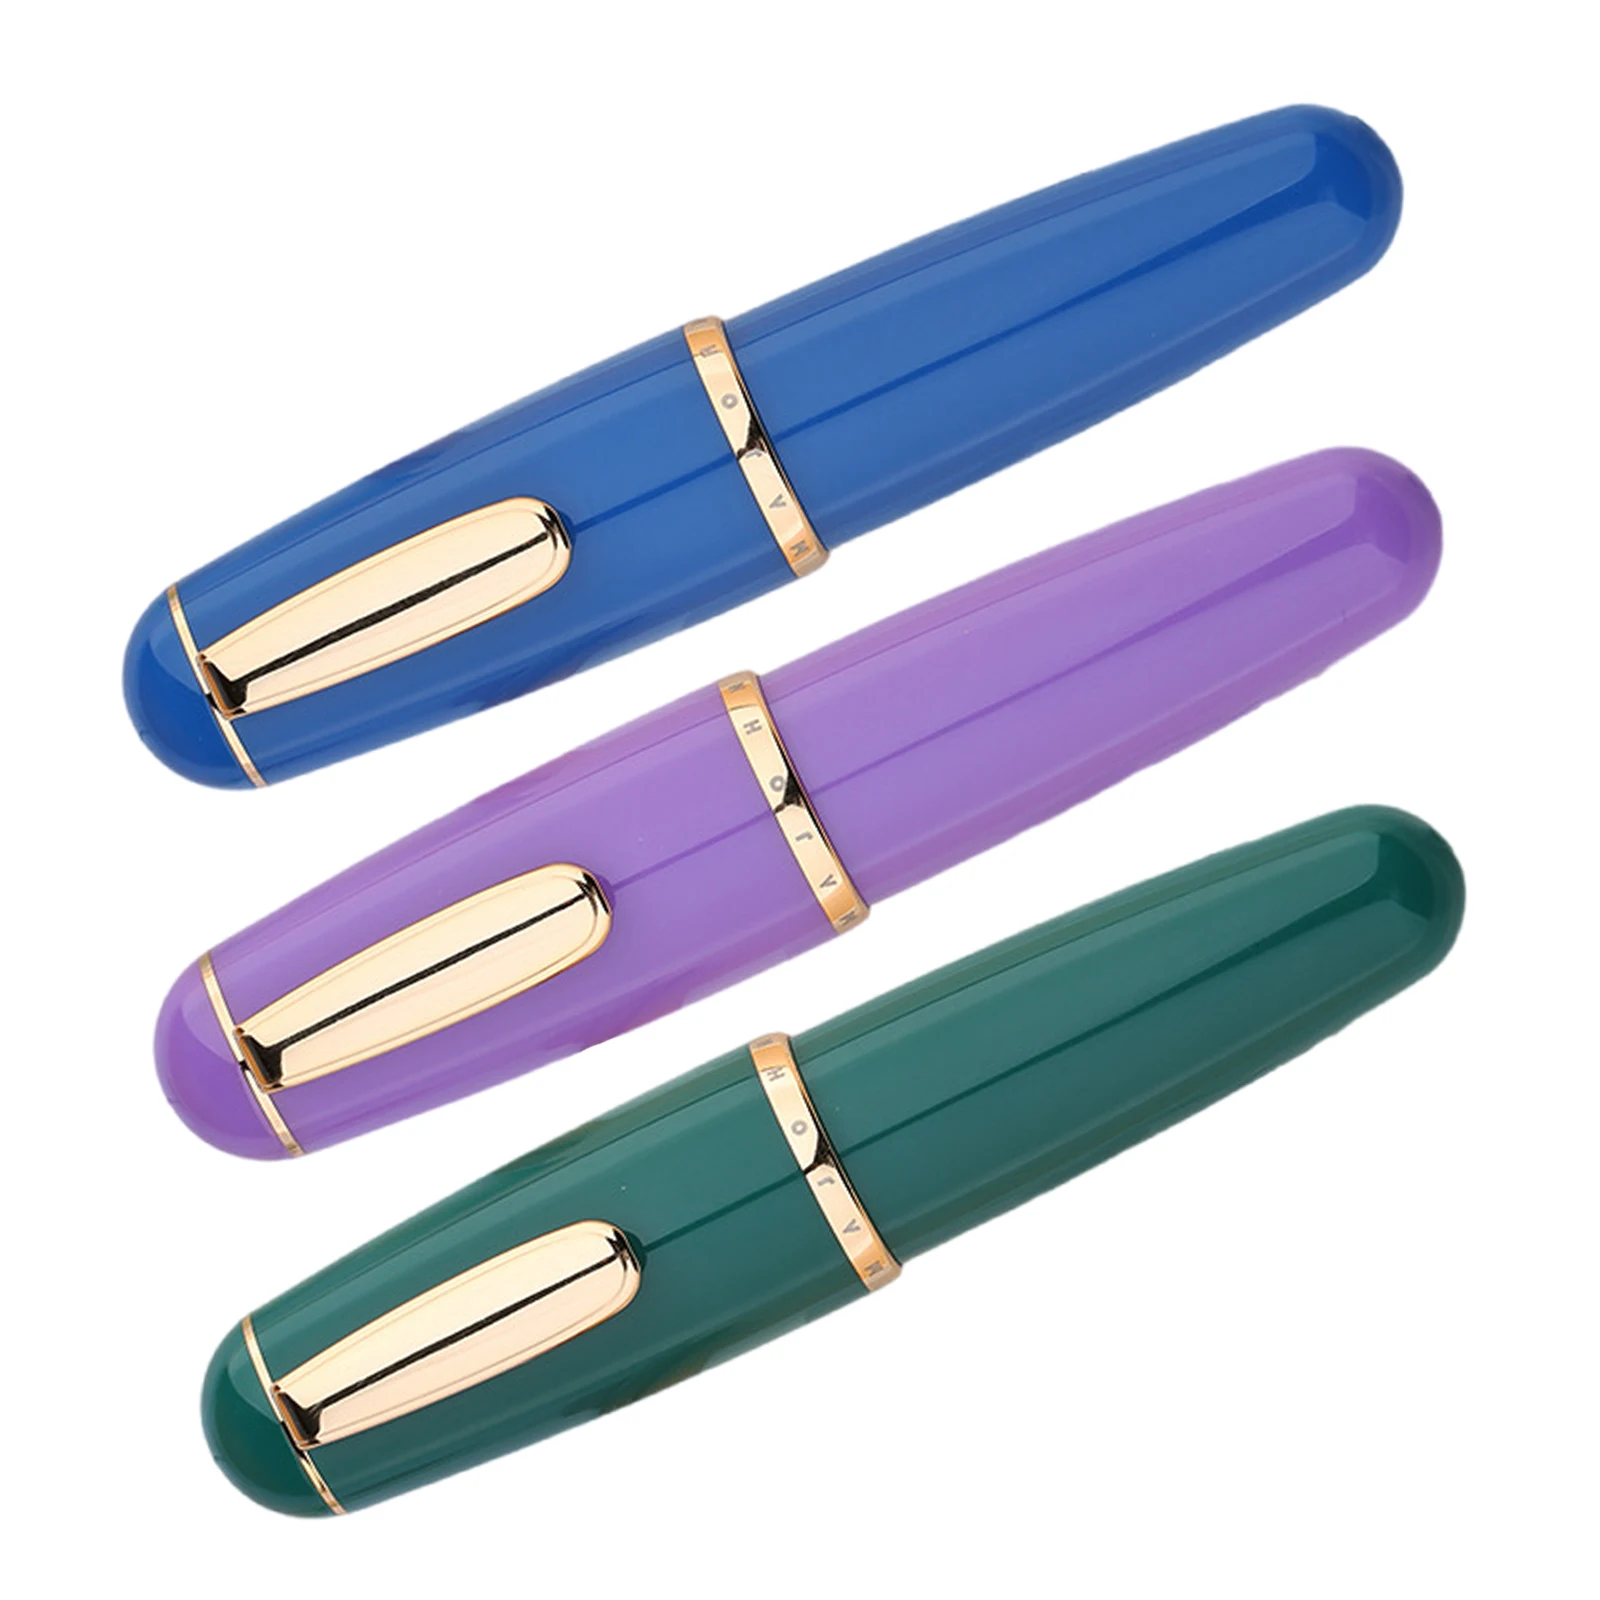 

MAJOHN Q1 Mini Resin Fountain Pen Iridium EF/F Nib Dropper Short Pocket Ink Pens school office 귀여운 문구 gifts pens for students